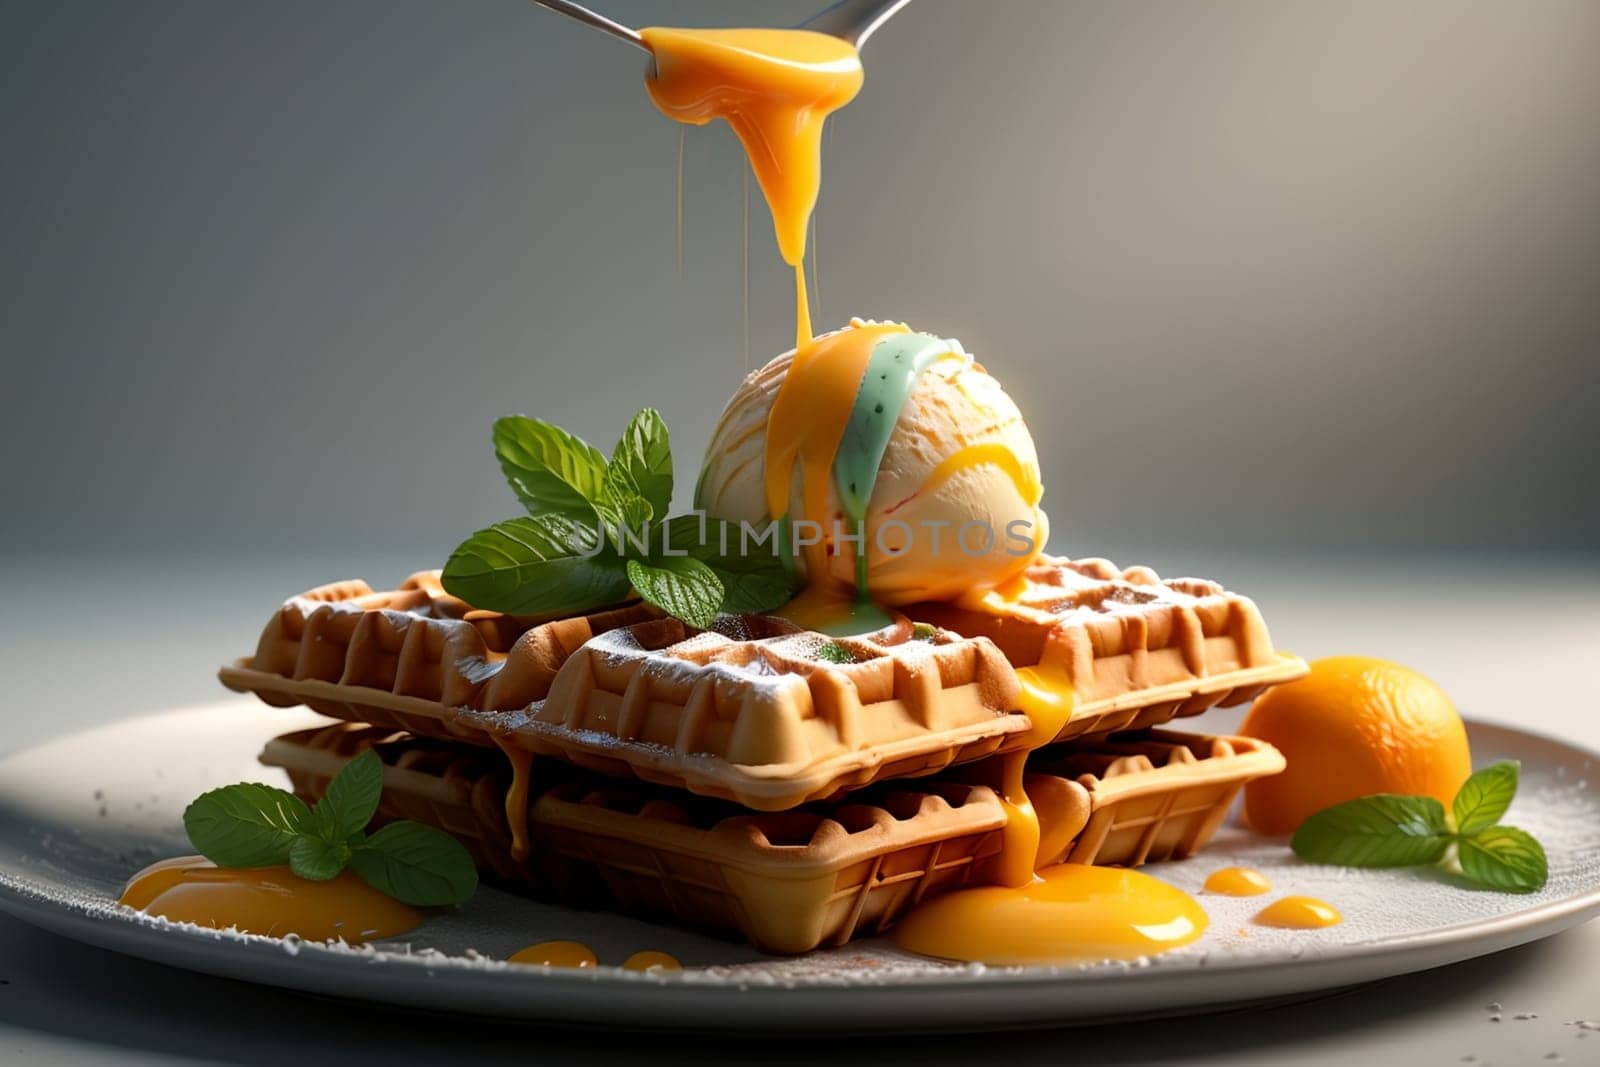 Viennese waffles and balls of juicy mint orange ice cream by Rawlik